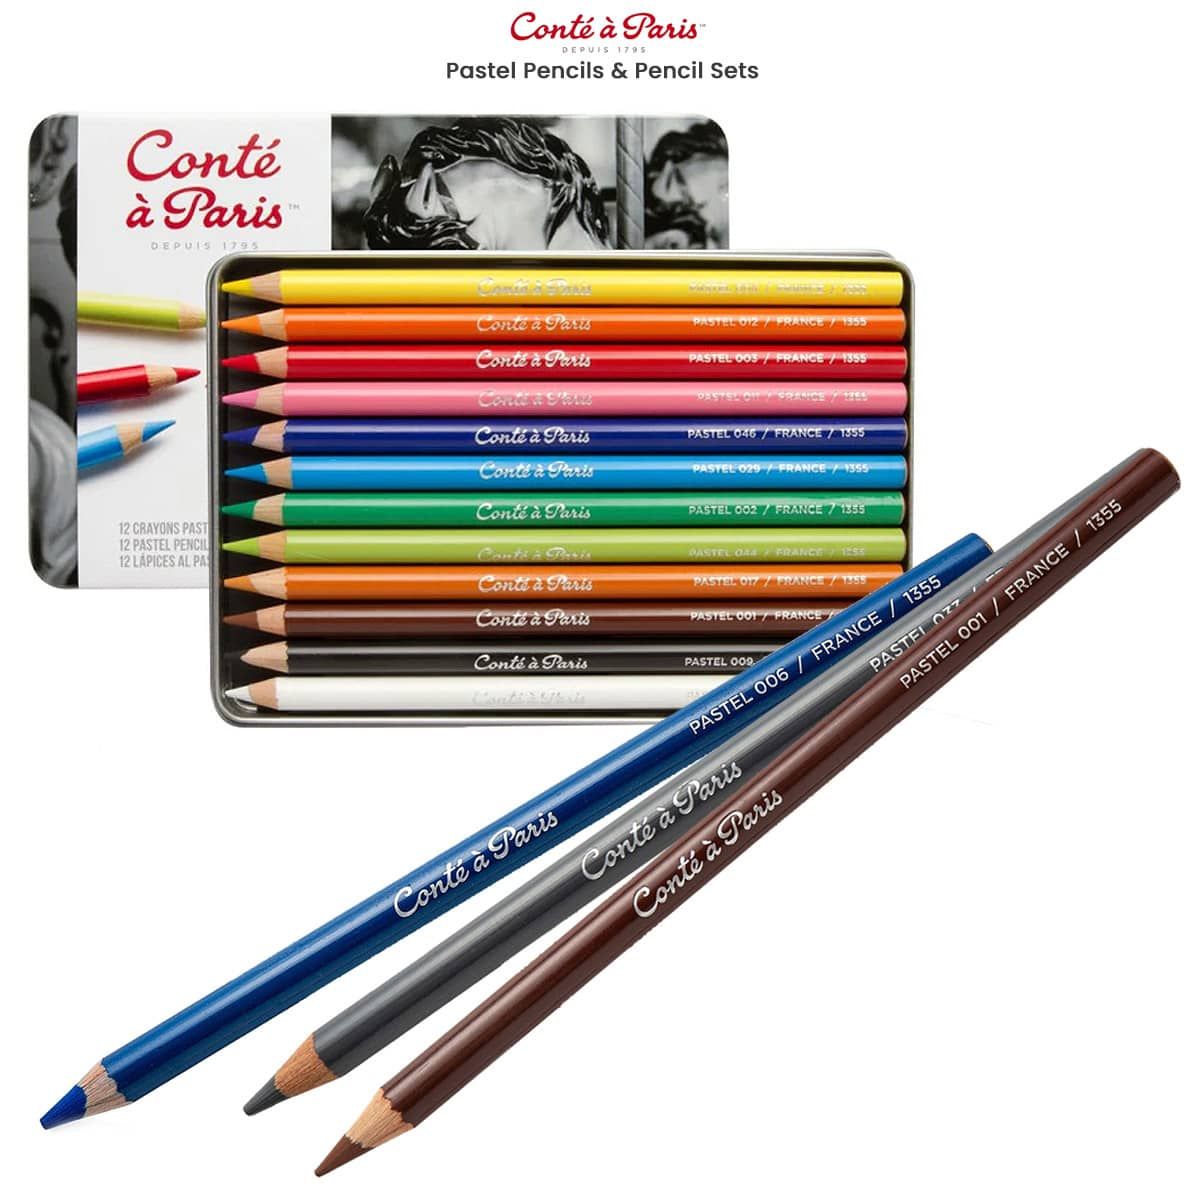 https://www.jerrysartarama.com/media/catalog/product/cache/ecb49a32eeb5603594b082bd5fe65733/c/o/conte-a-paris-pastel-pencils-pastelpencil-sets-main.jpg